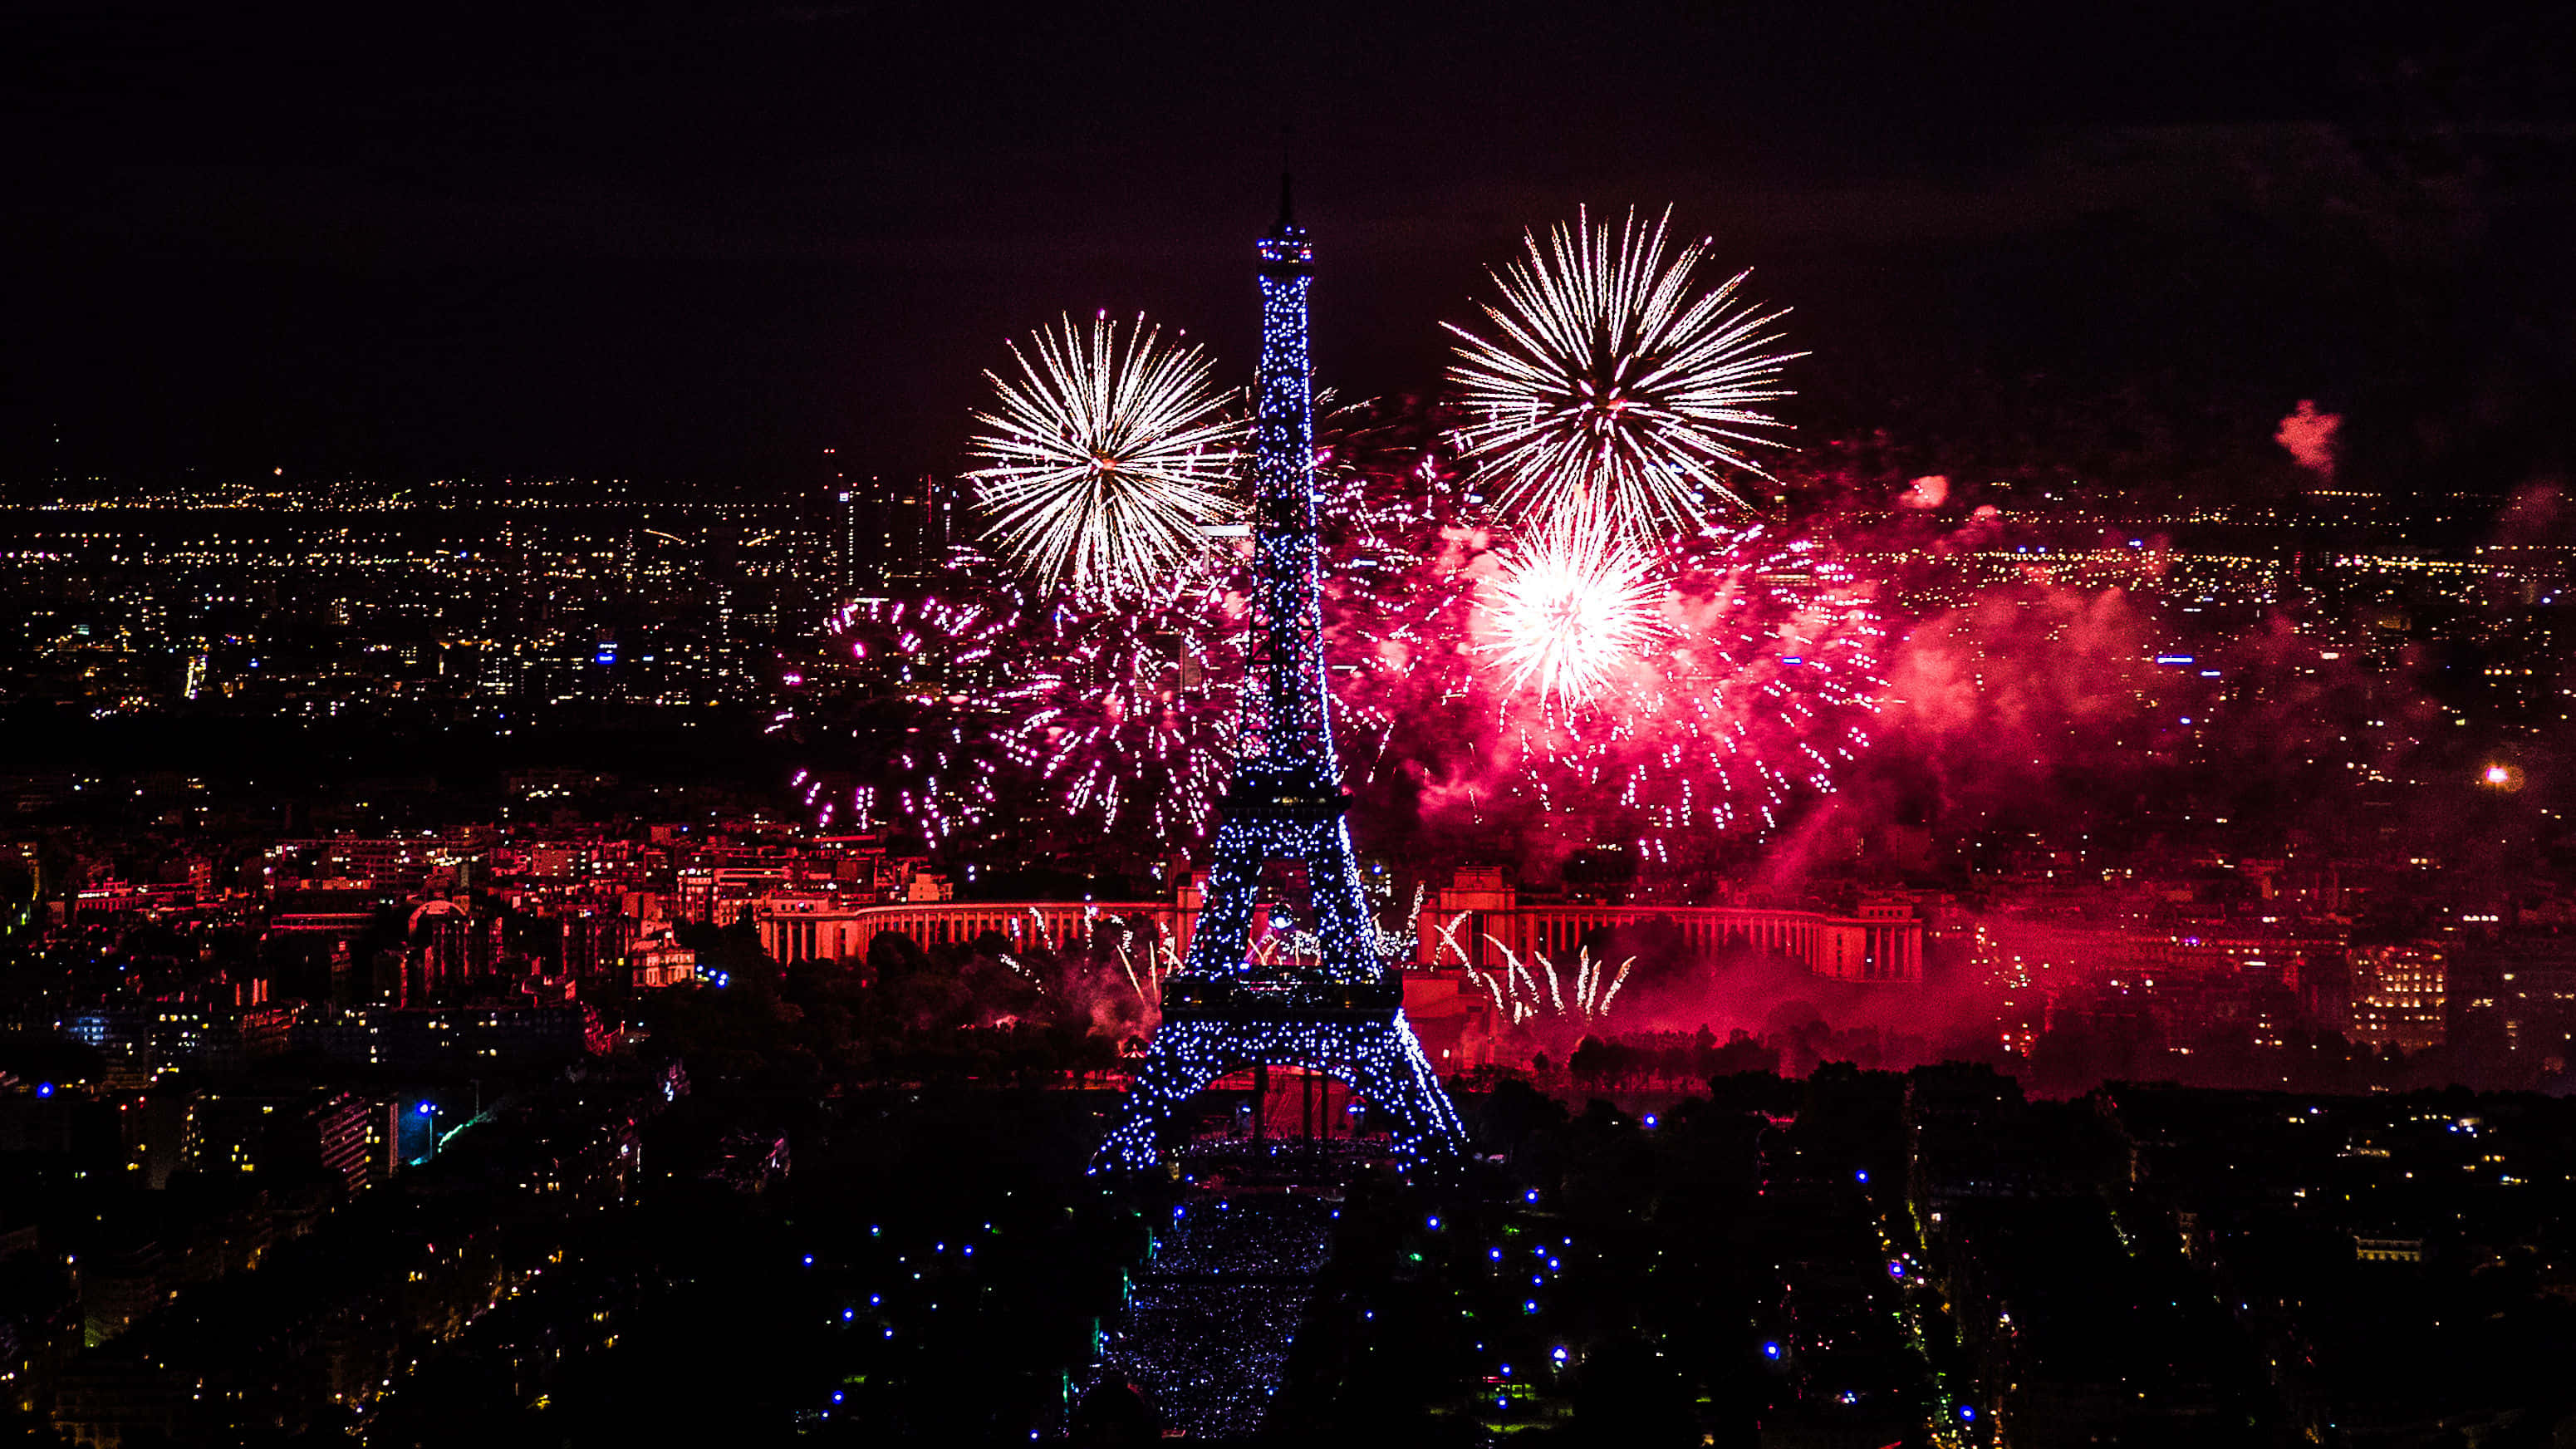 Njutav Den Fantastiska Skönheten Hos Eiffeltornet På Natten.